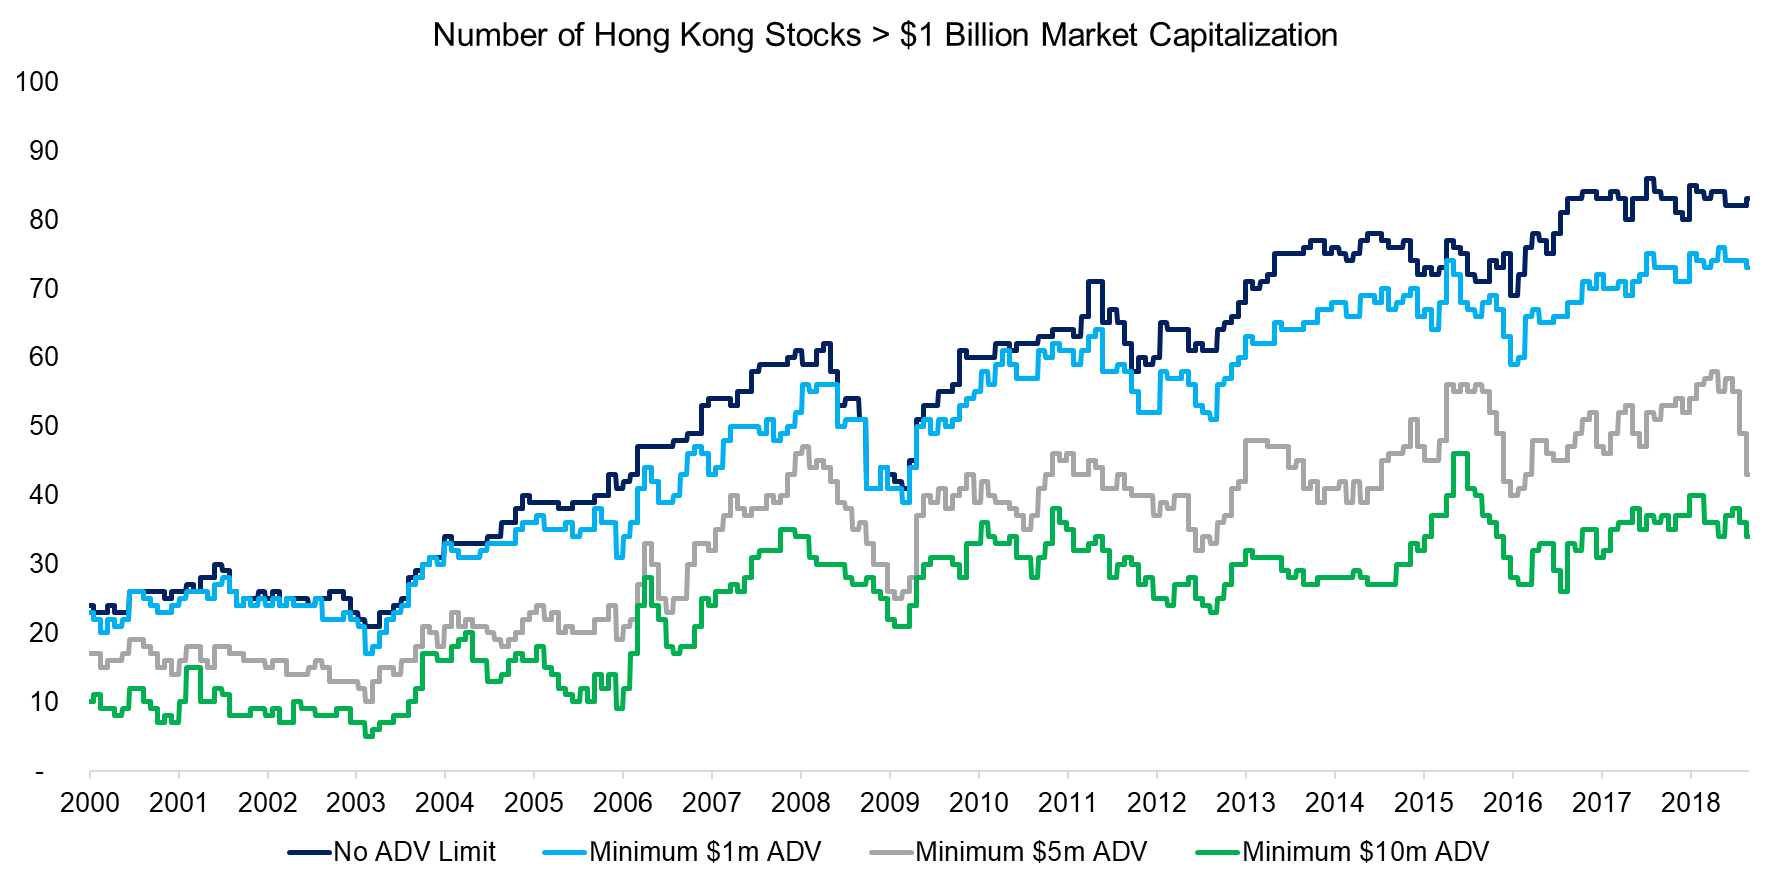 Number of Hong Kong Stocks $1 Billion Market Capitalization